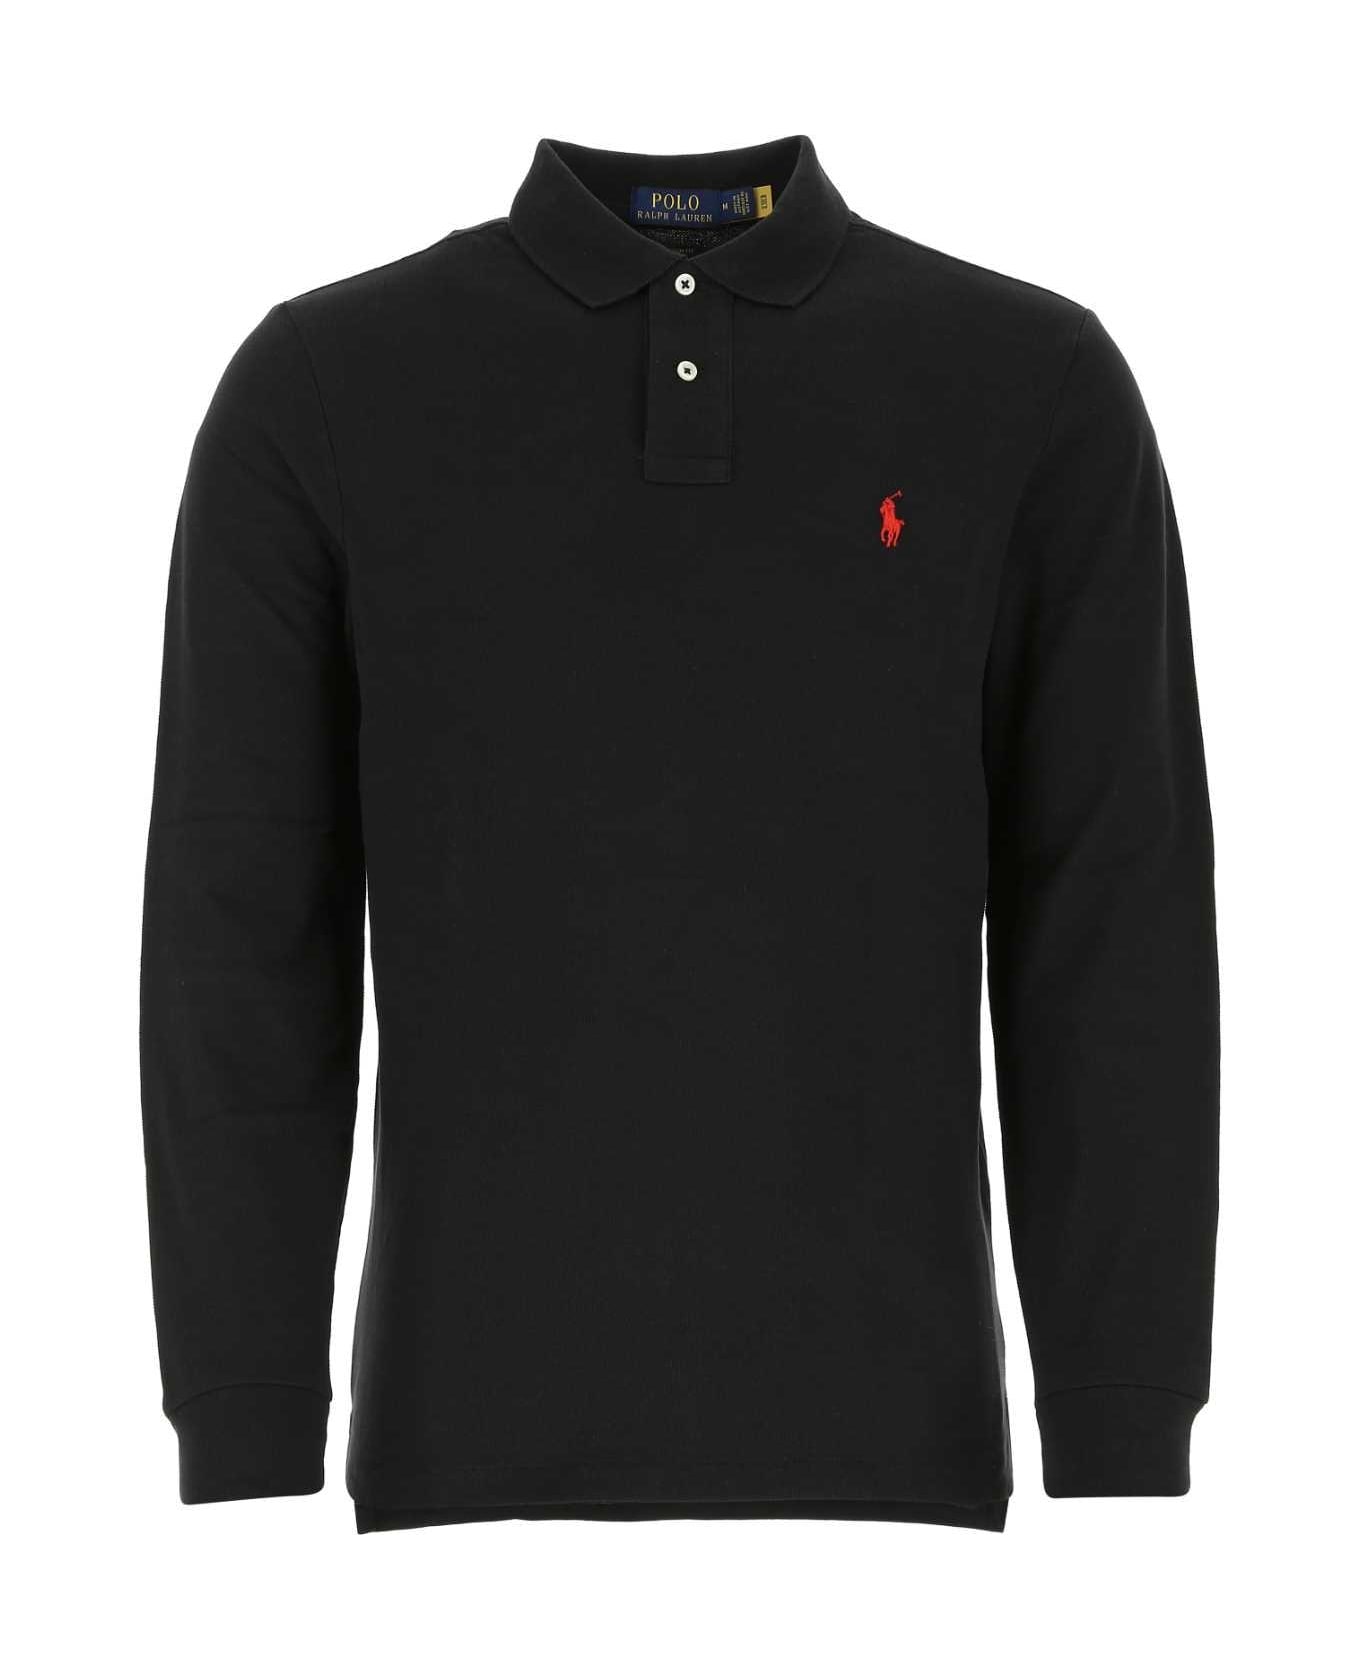 Ralph Lauren Logo Embroidered Long Sleeve Polo pens Shirt - Polo pens Black